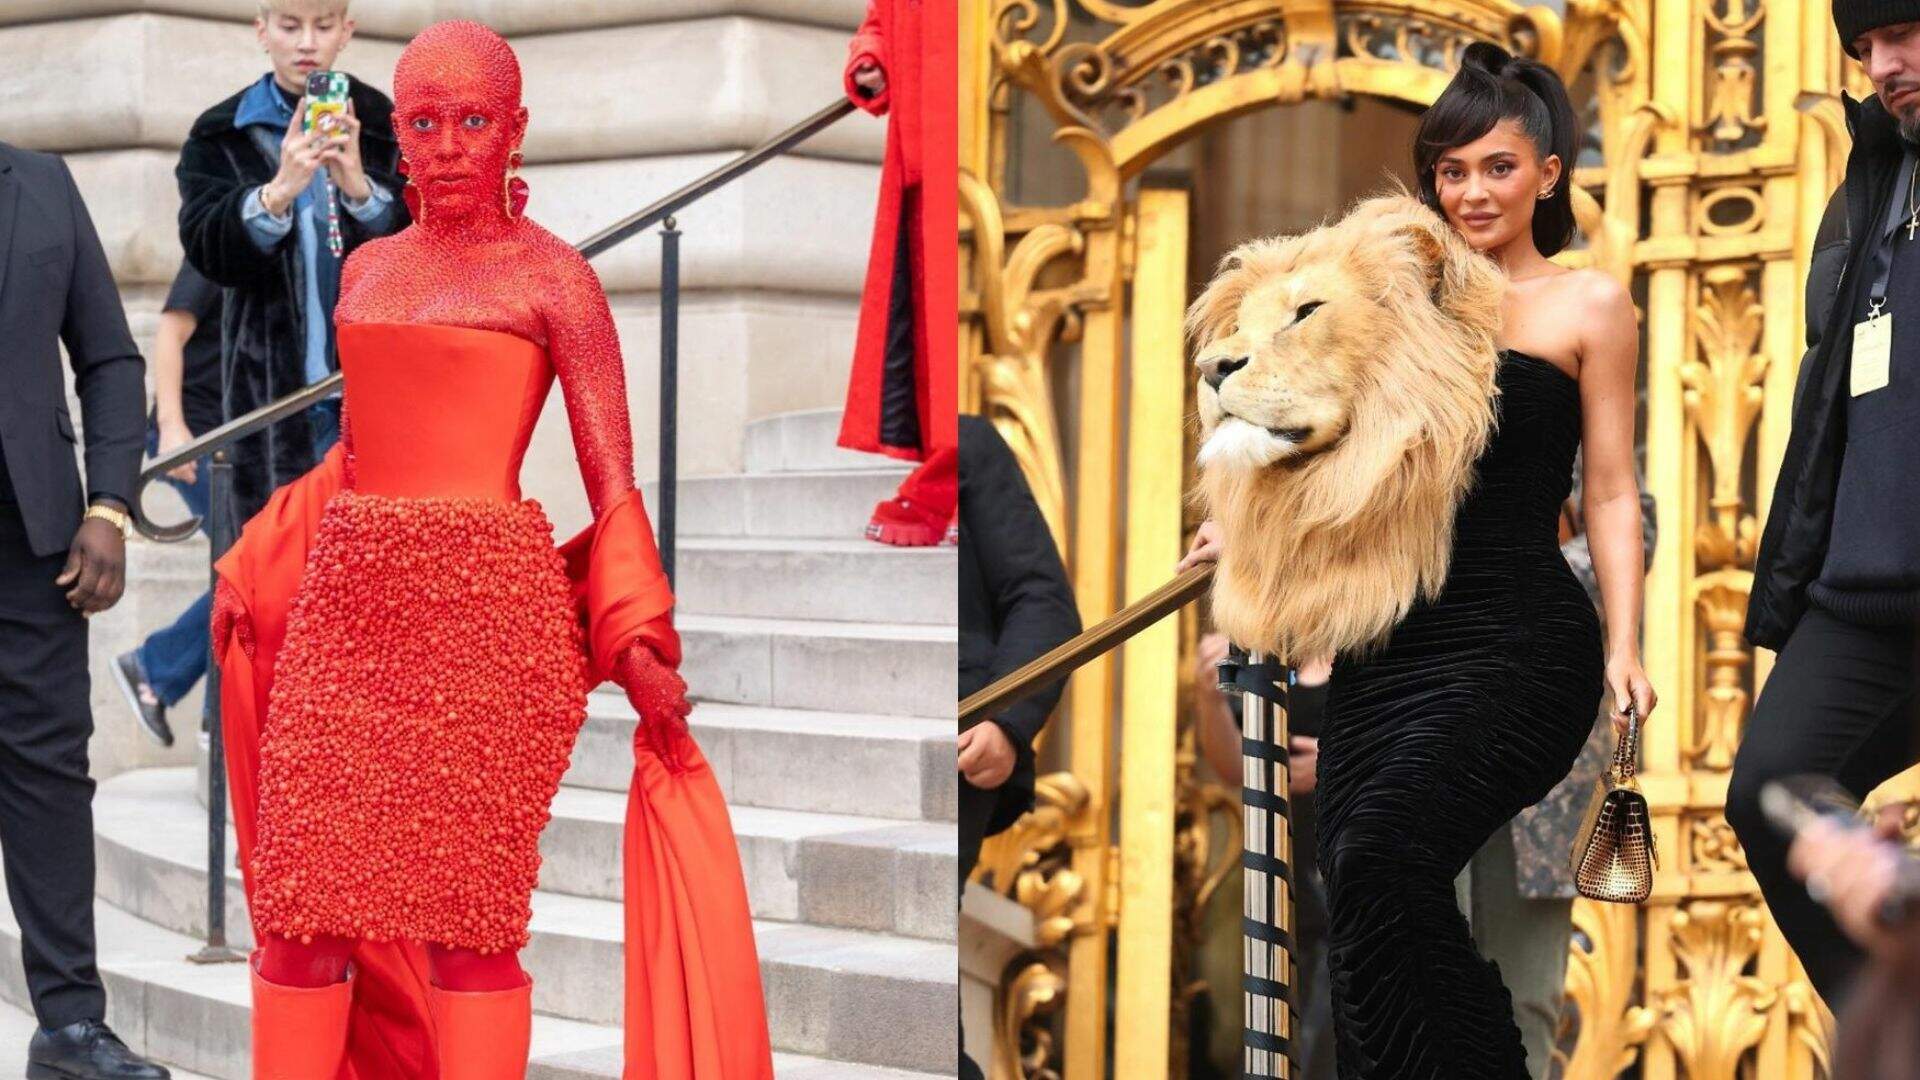 Paris Fashion Week 2023: Doja Cat e Kylie Jenner surgem com looks polêmicos em desfile - Metropolitana FM